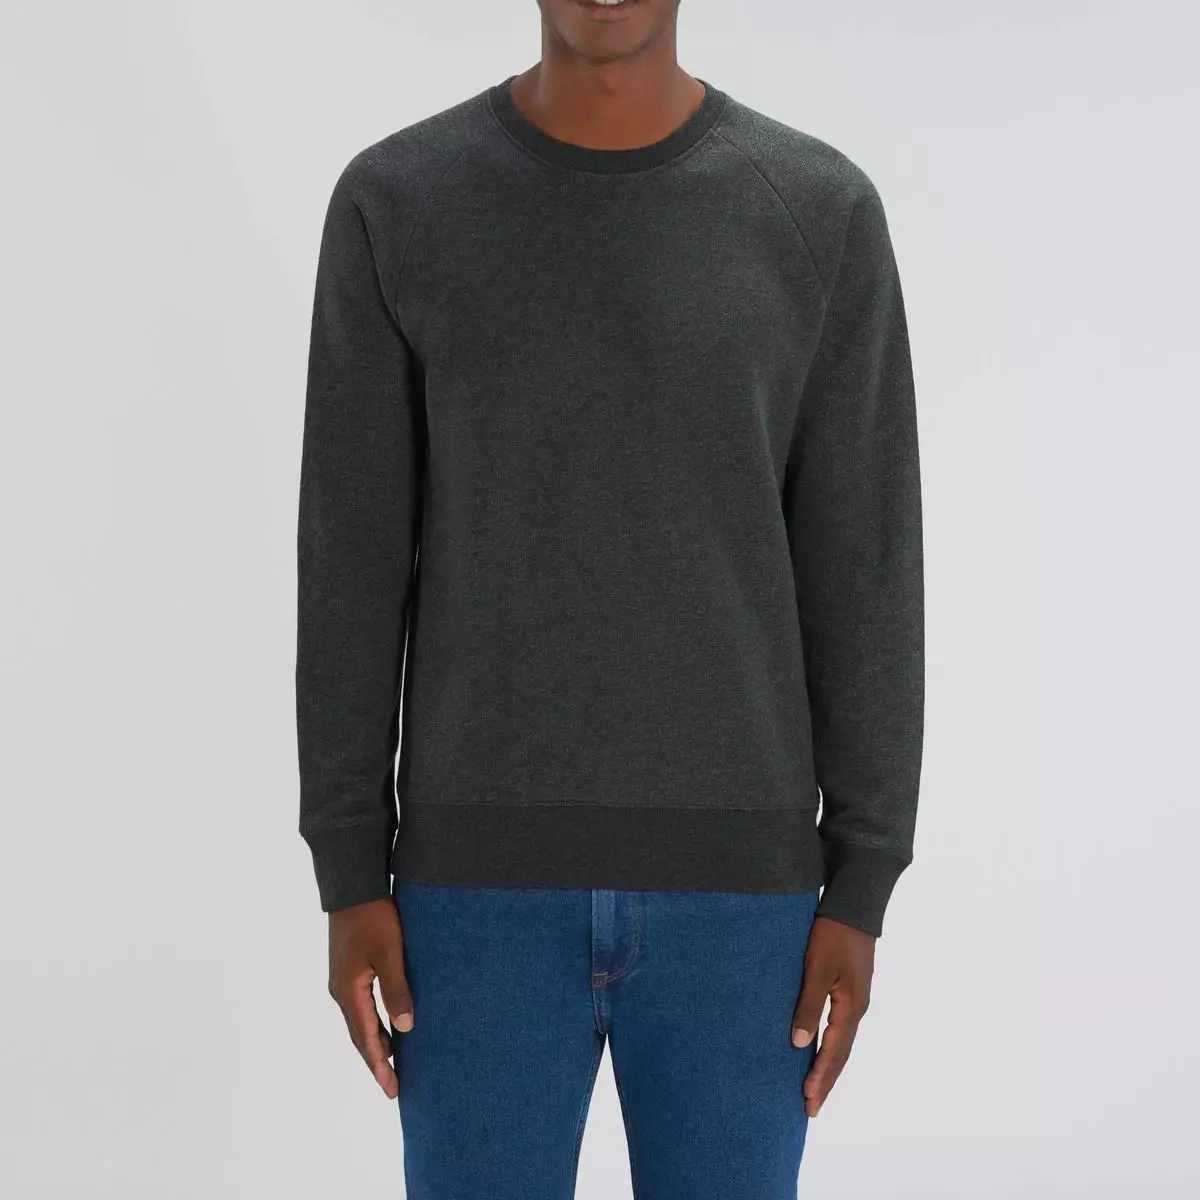 Sweater Modell: Stockholm